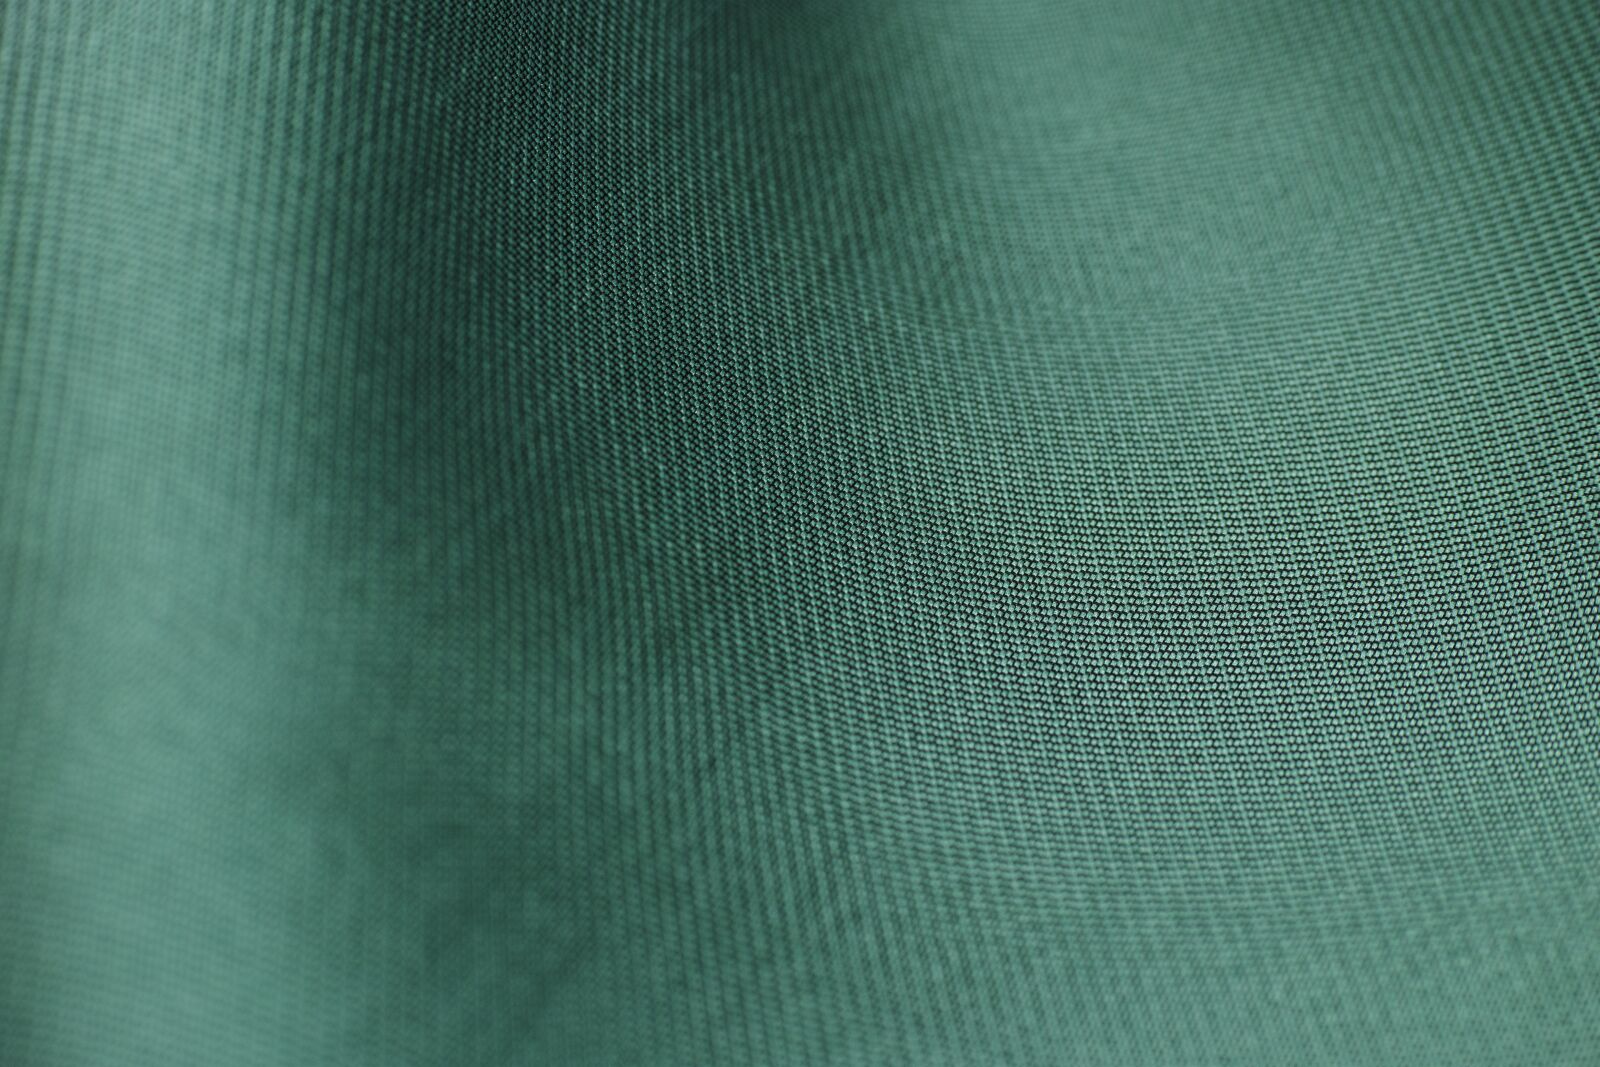 Sigma dp3 Quattro sample photo. Green, fabric, textile photography